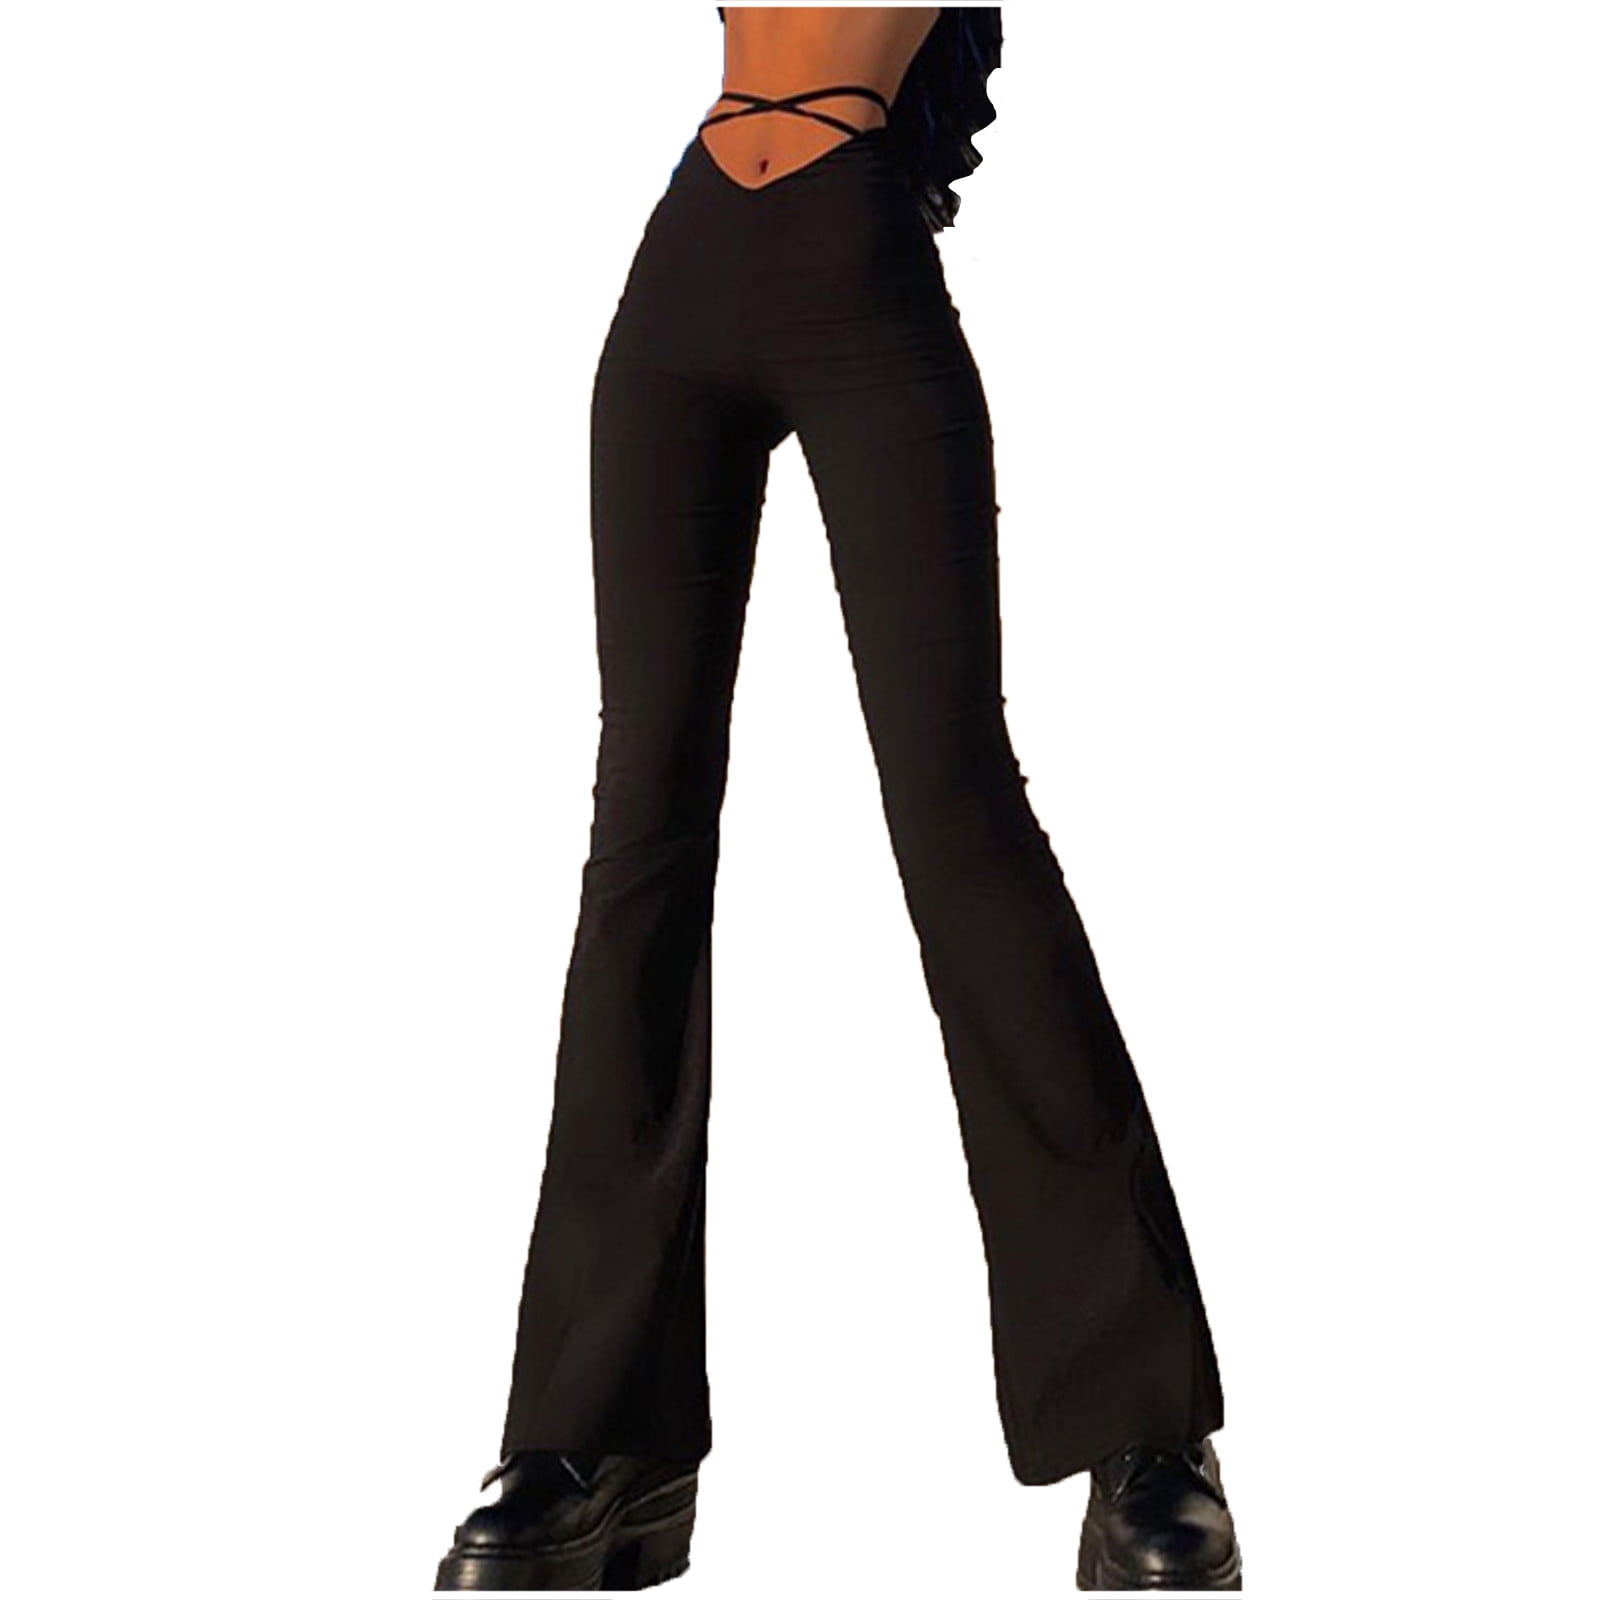 Hfyihgf Women's Bootcut Yoga Pants Flare Leggings for Women High Waisted  V-Cross Workout Lounge Bell Bottom Jazz Dress Pants(Black,XL)